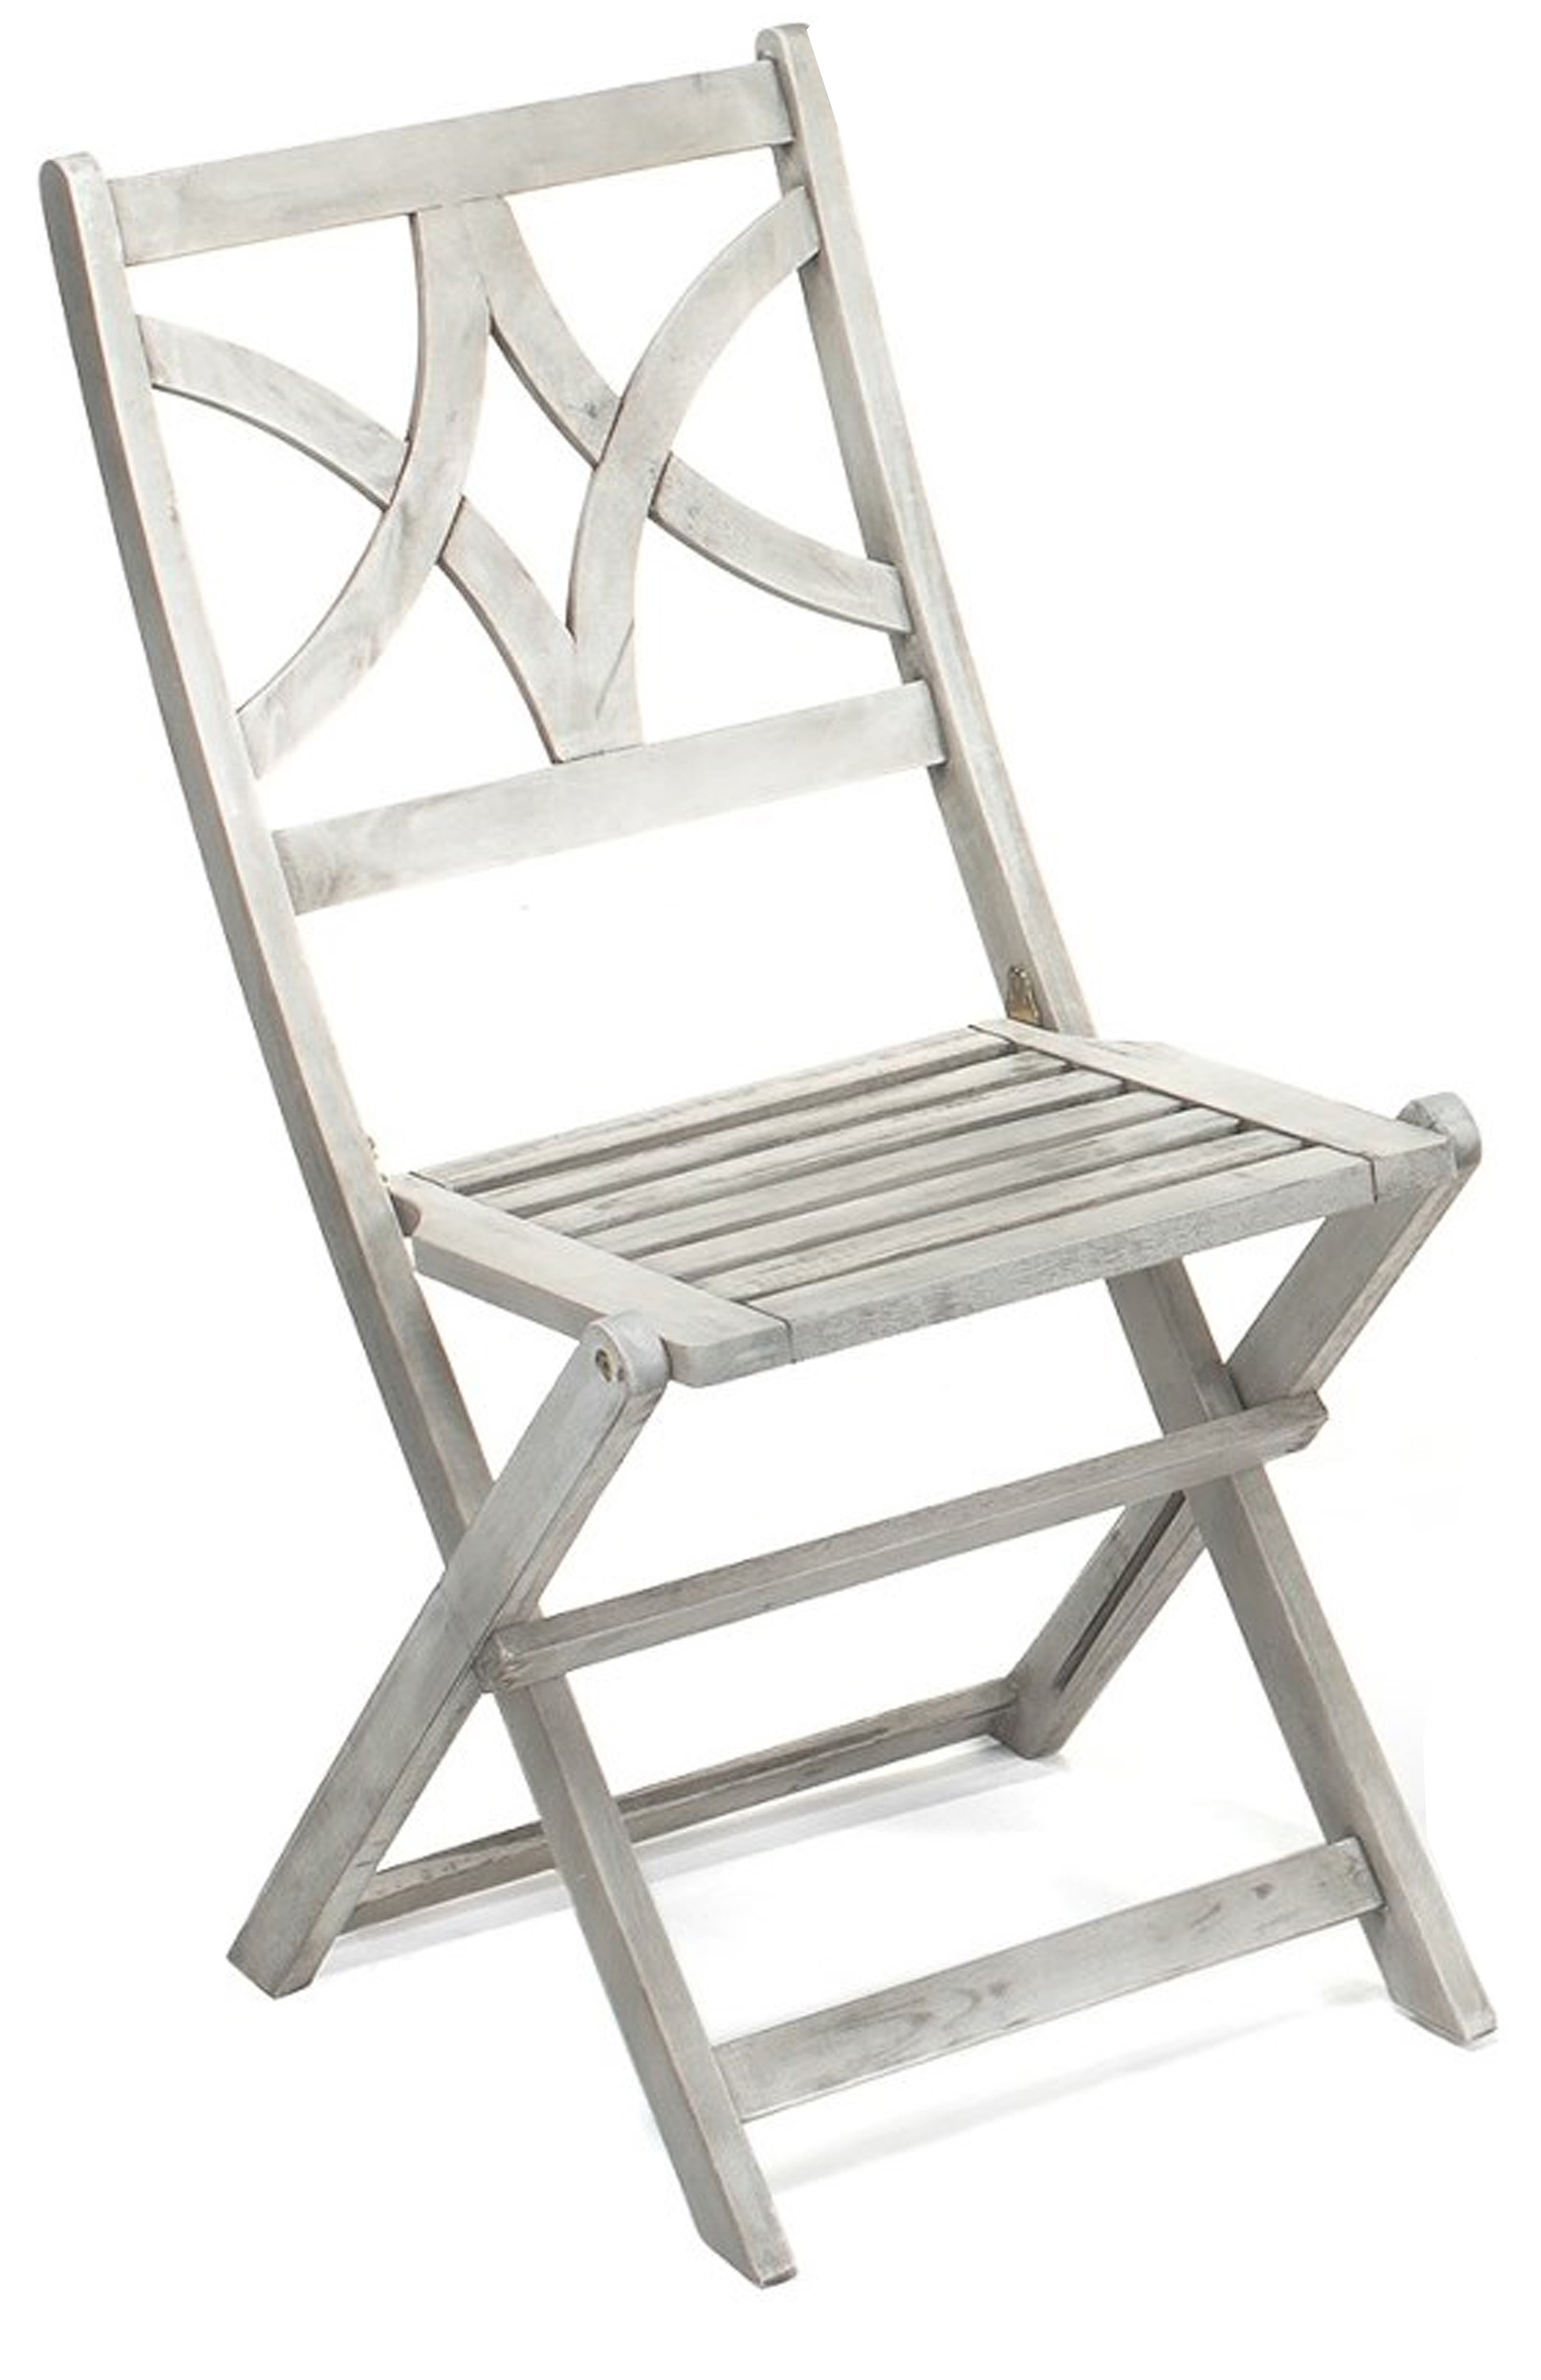 Jimco Recalls Bistro Chairs Due to Fall Hazard